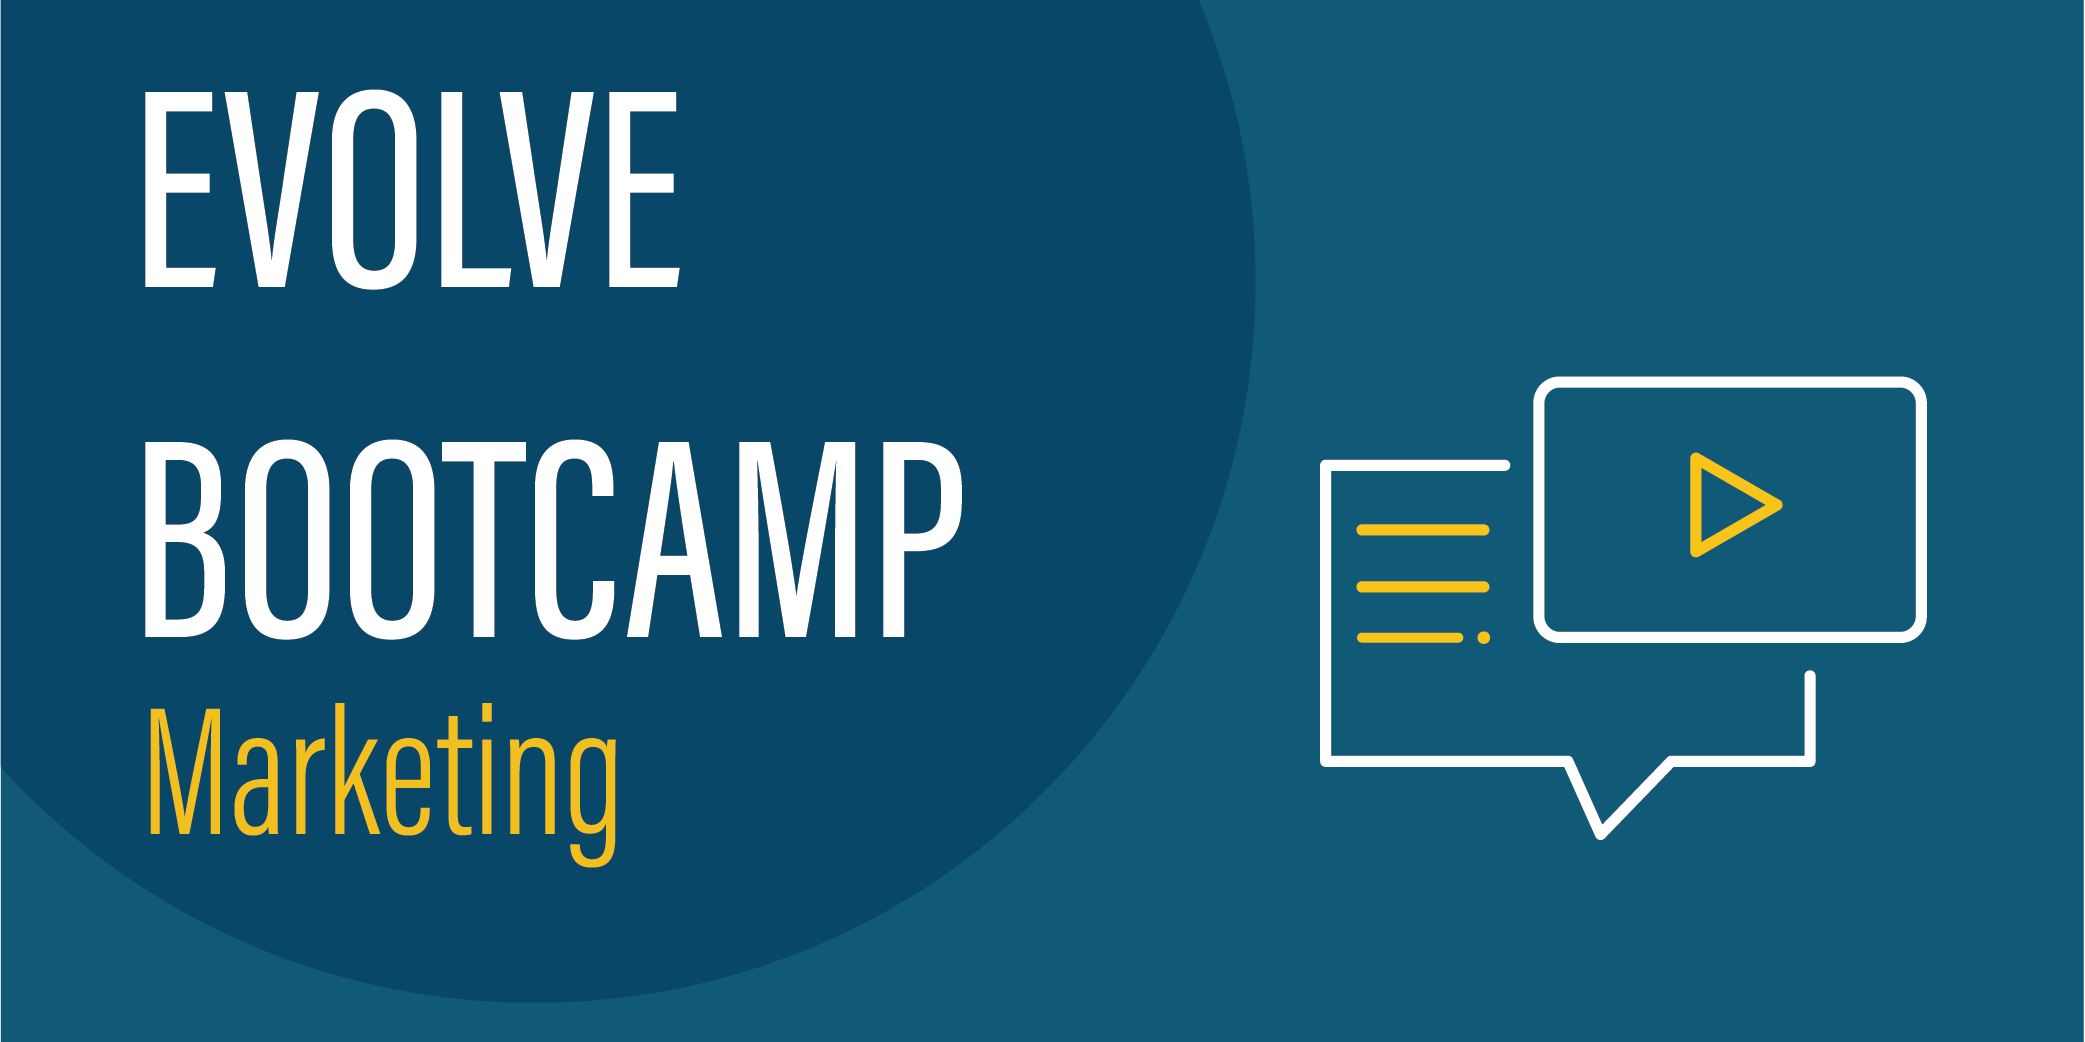 Evolve Bootcamp - Marketing